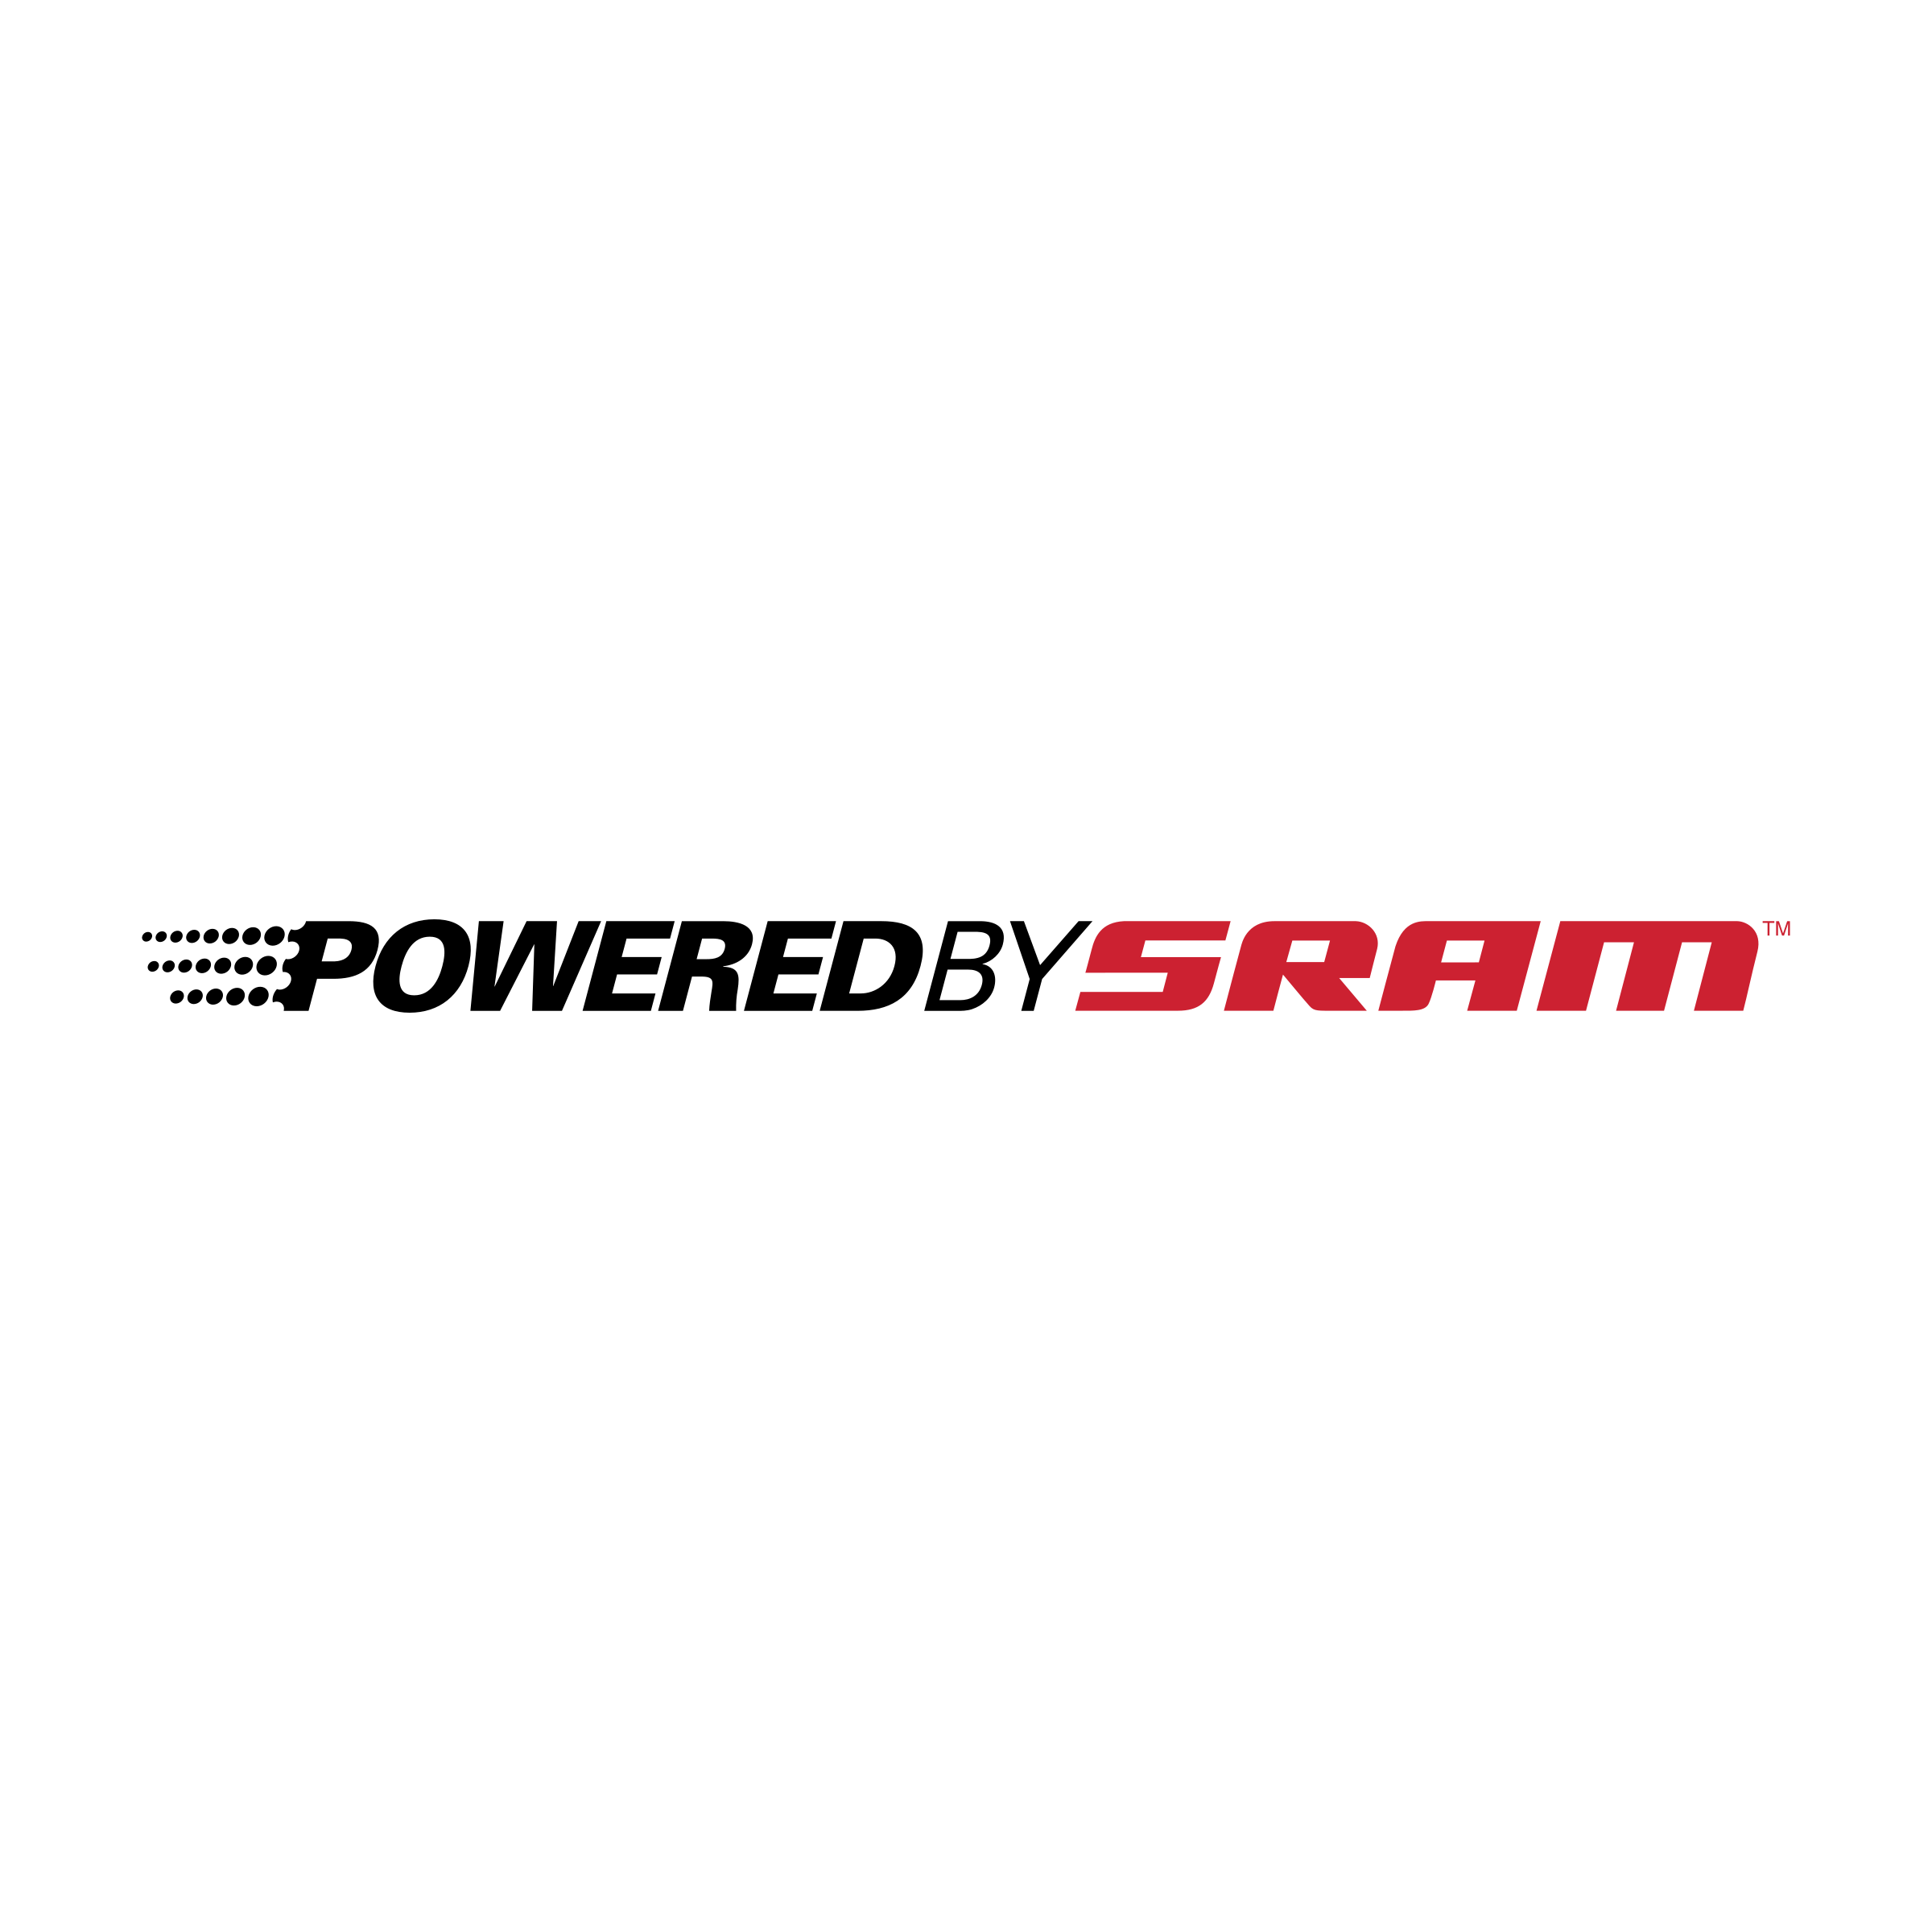 sram-3-logo-png-transparent